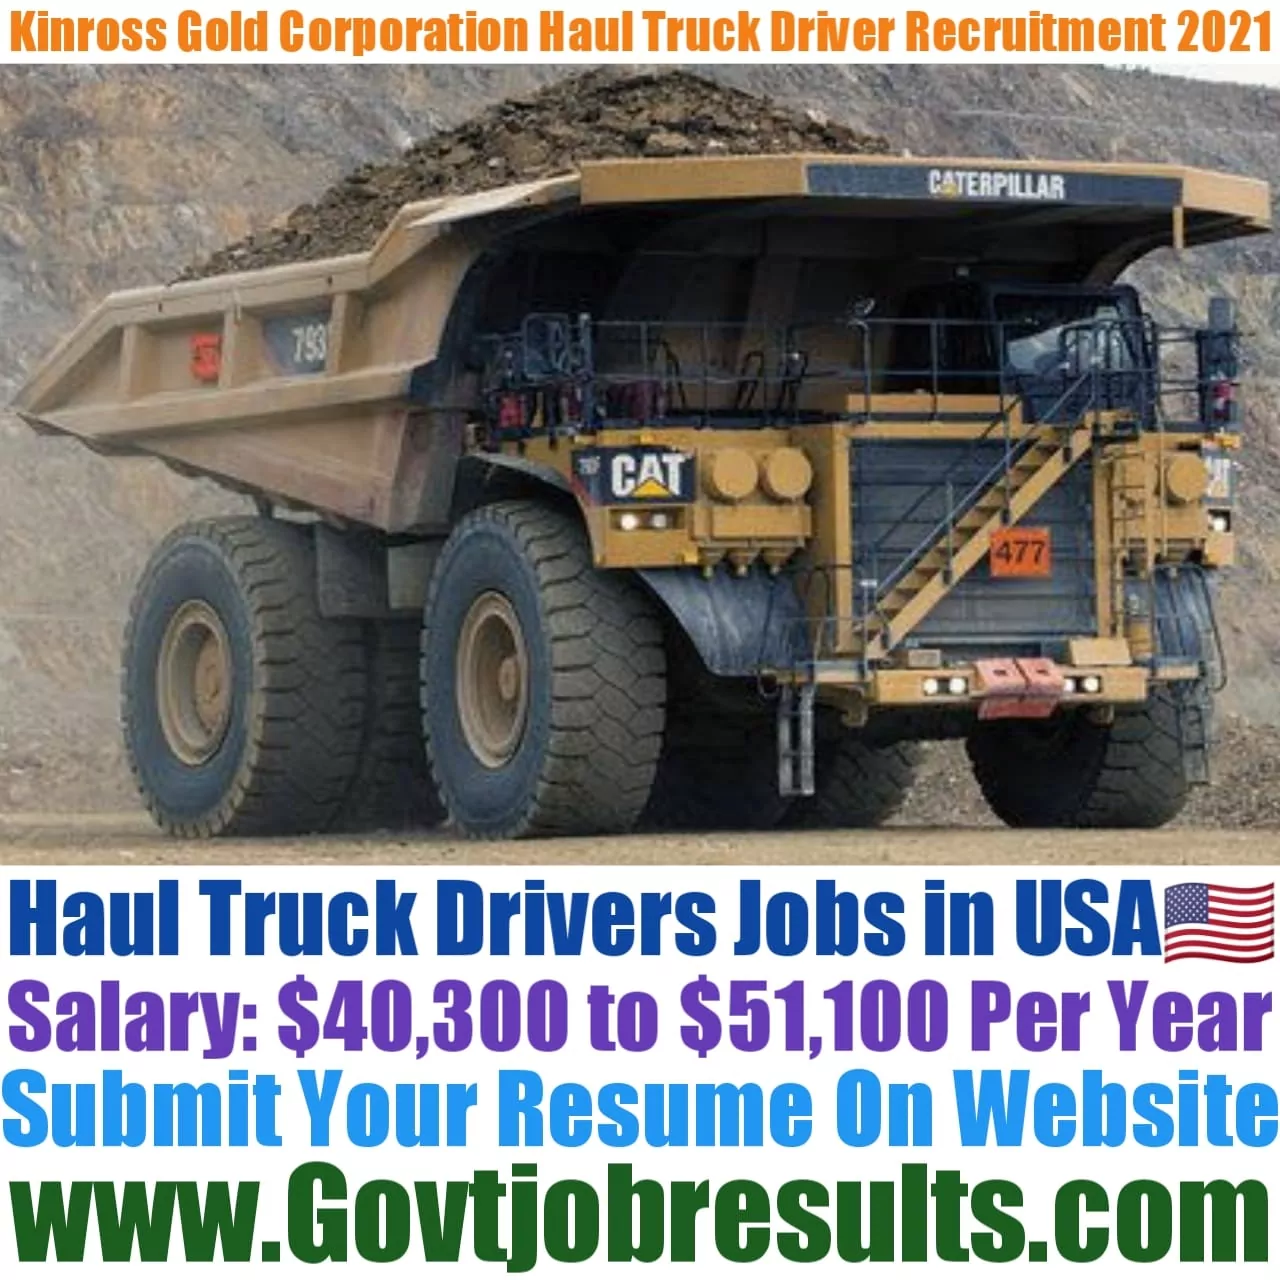 armored truck jobs salary